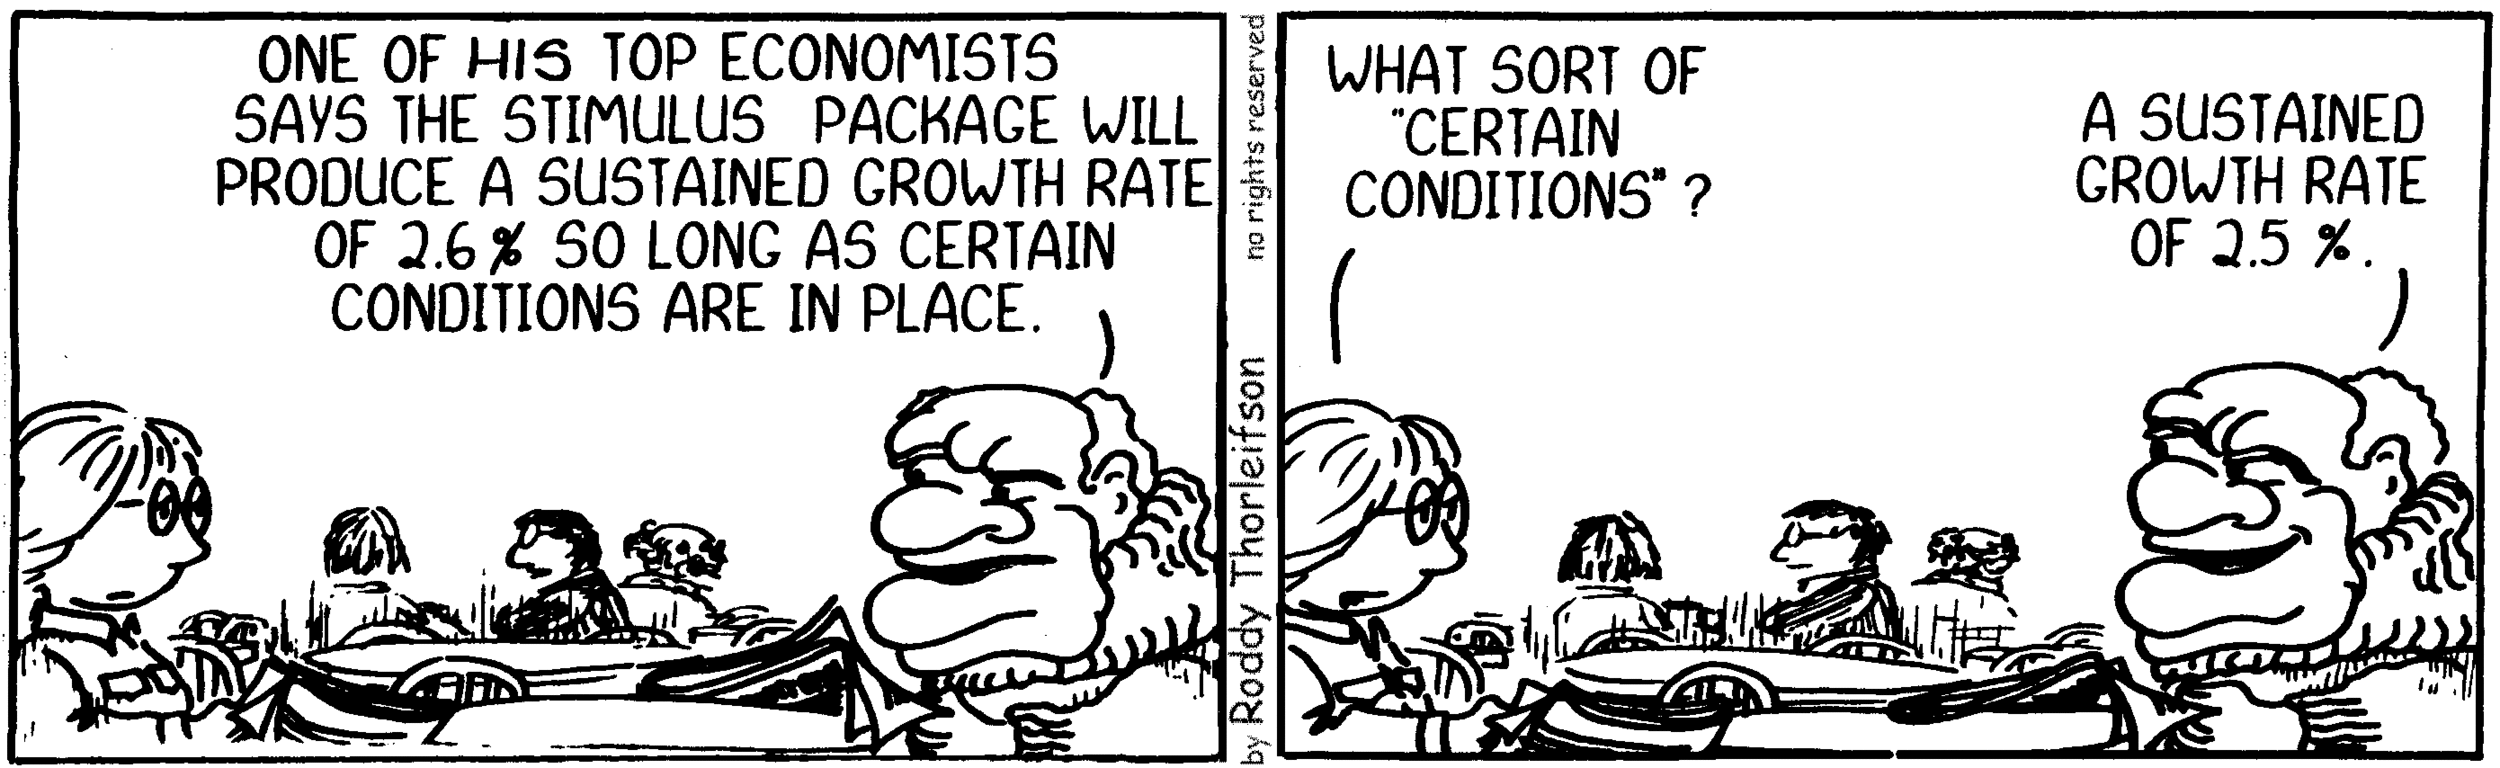 free cartoon economy economic economist stimulus packages sustained growth